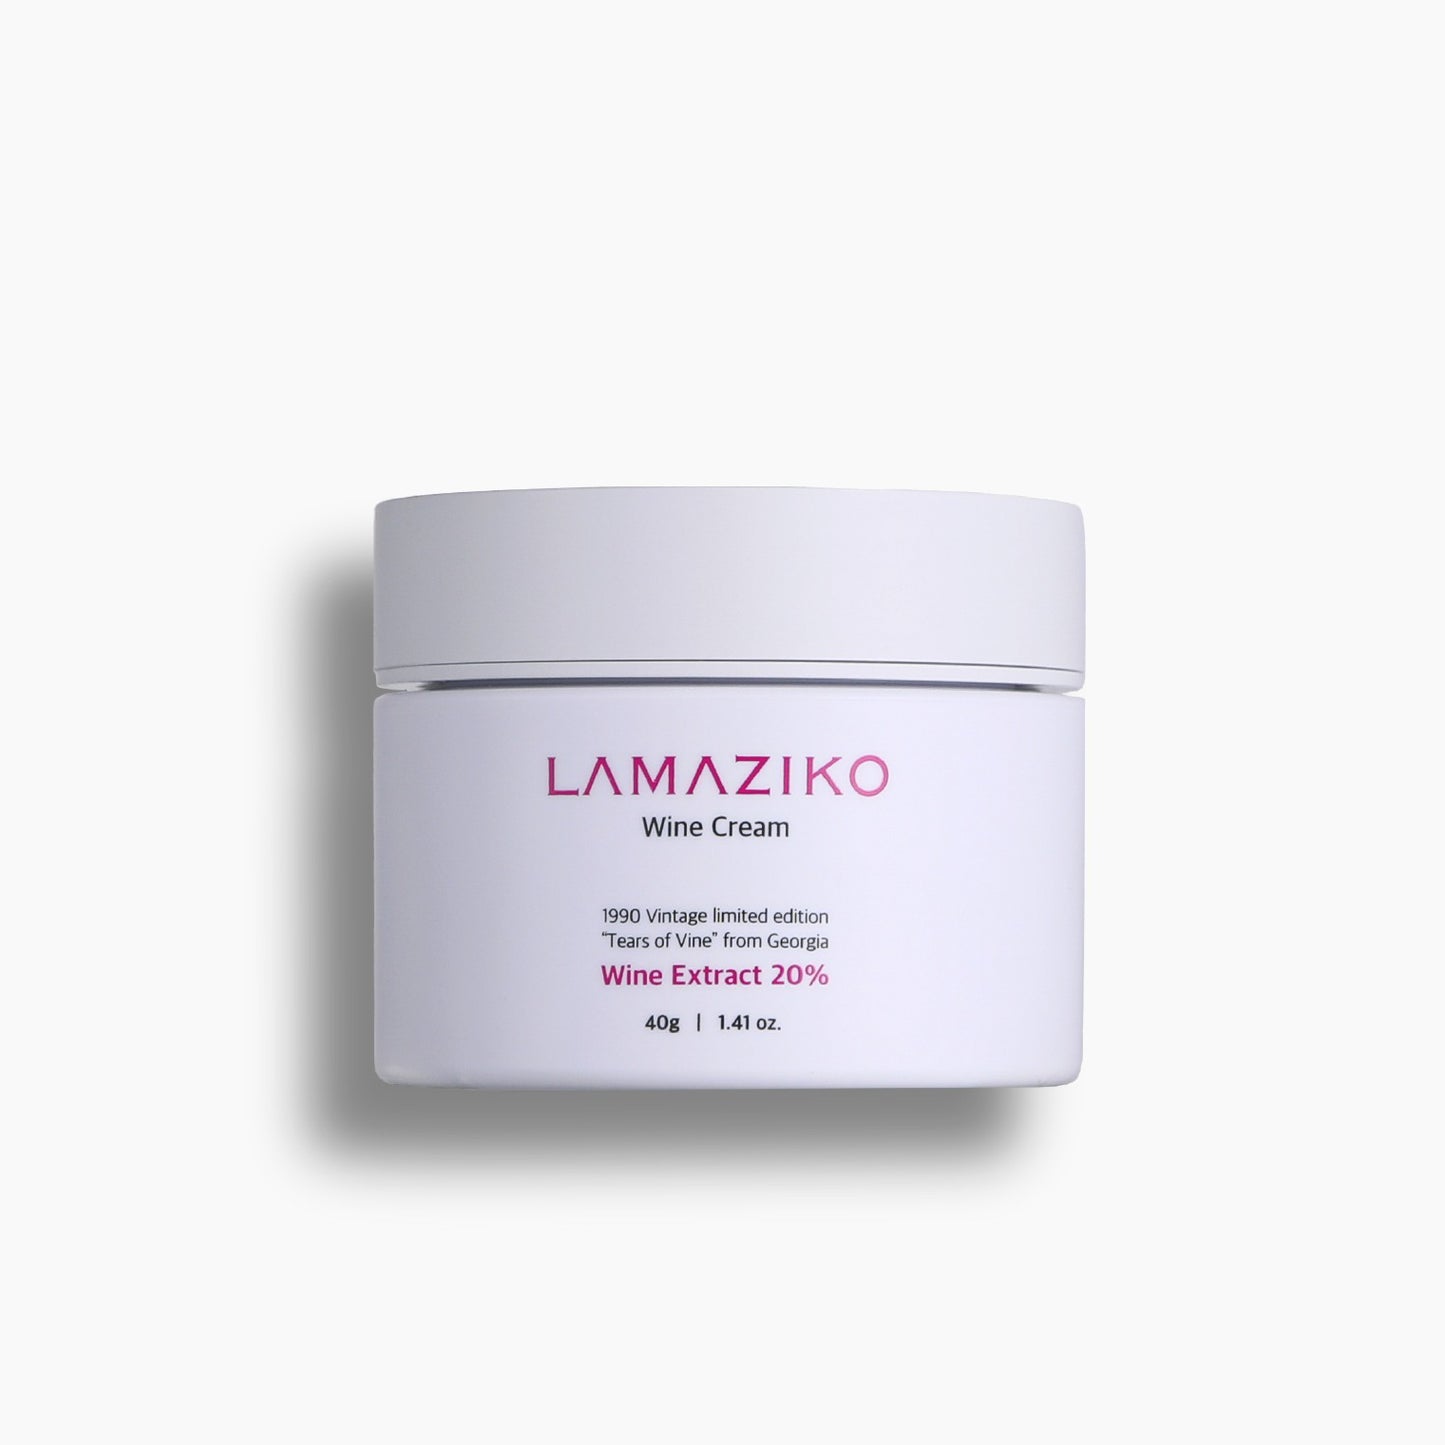 Lamaziko Wine Cream